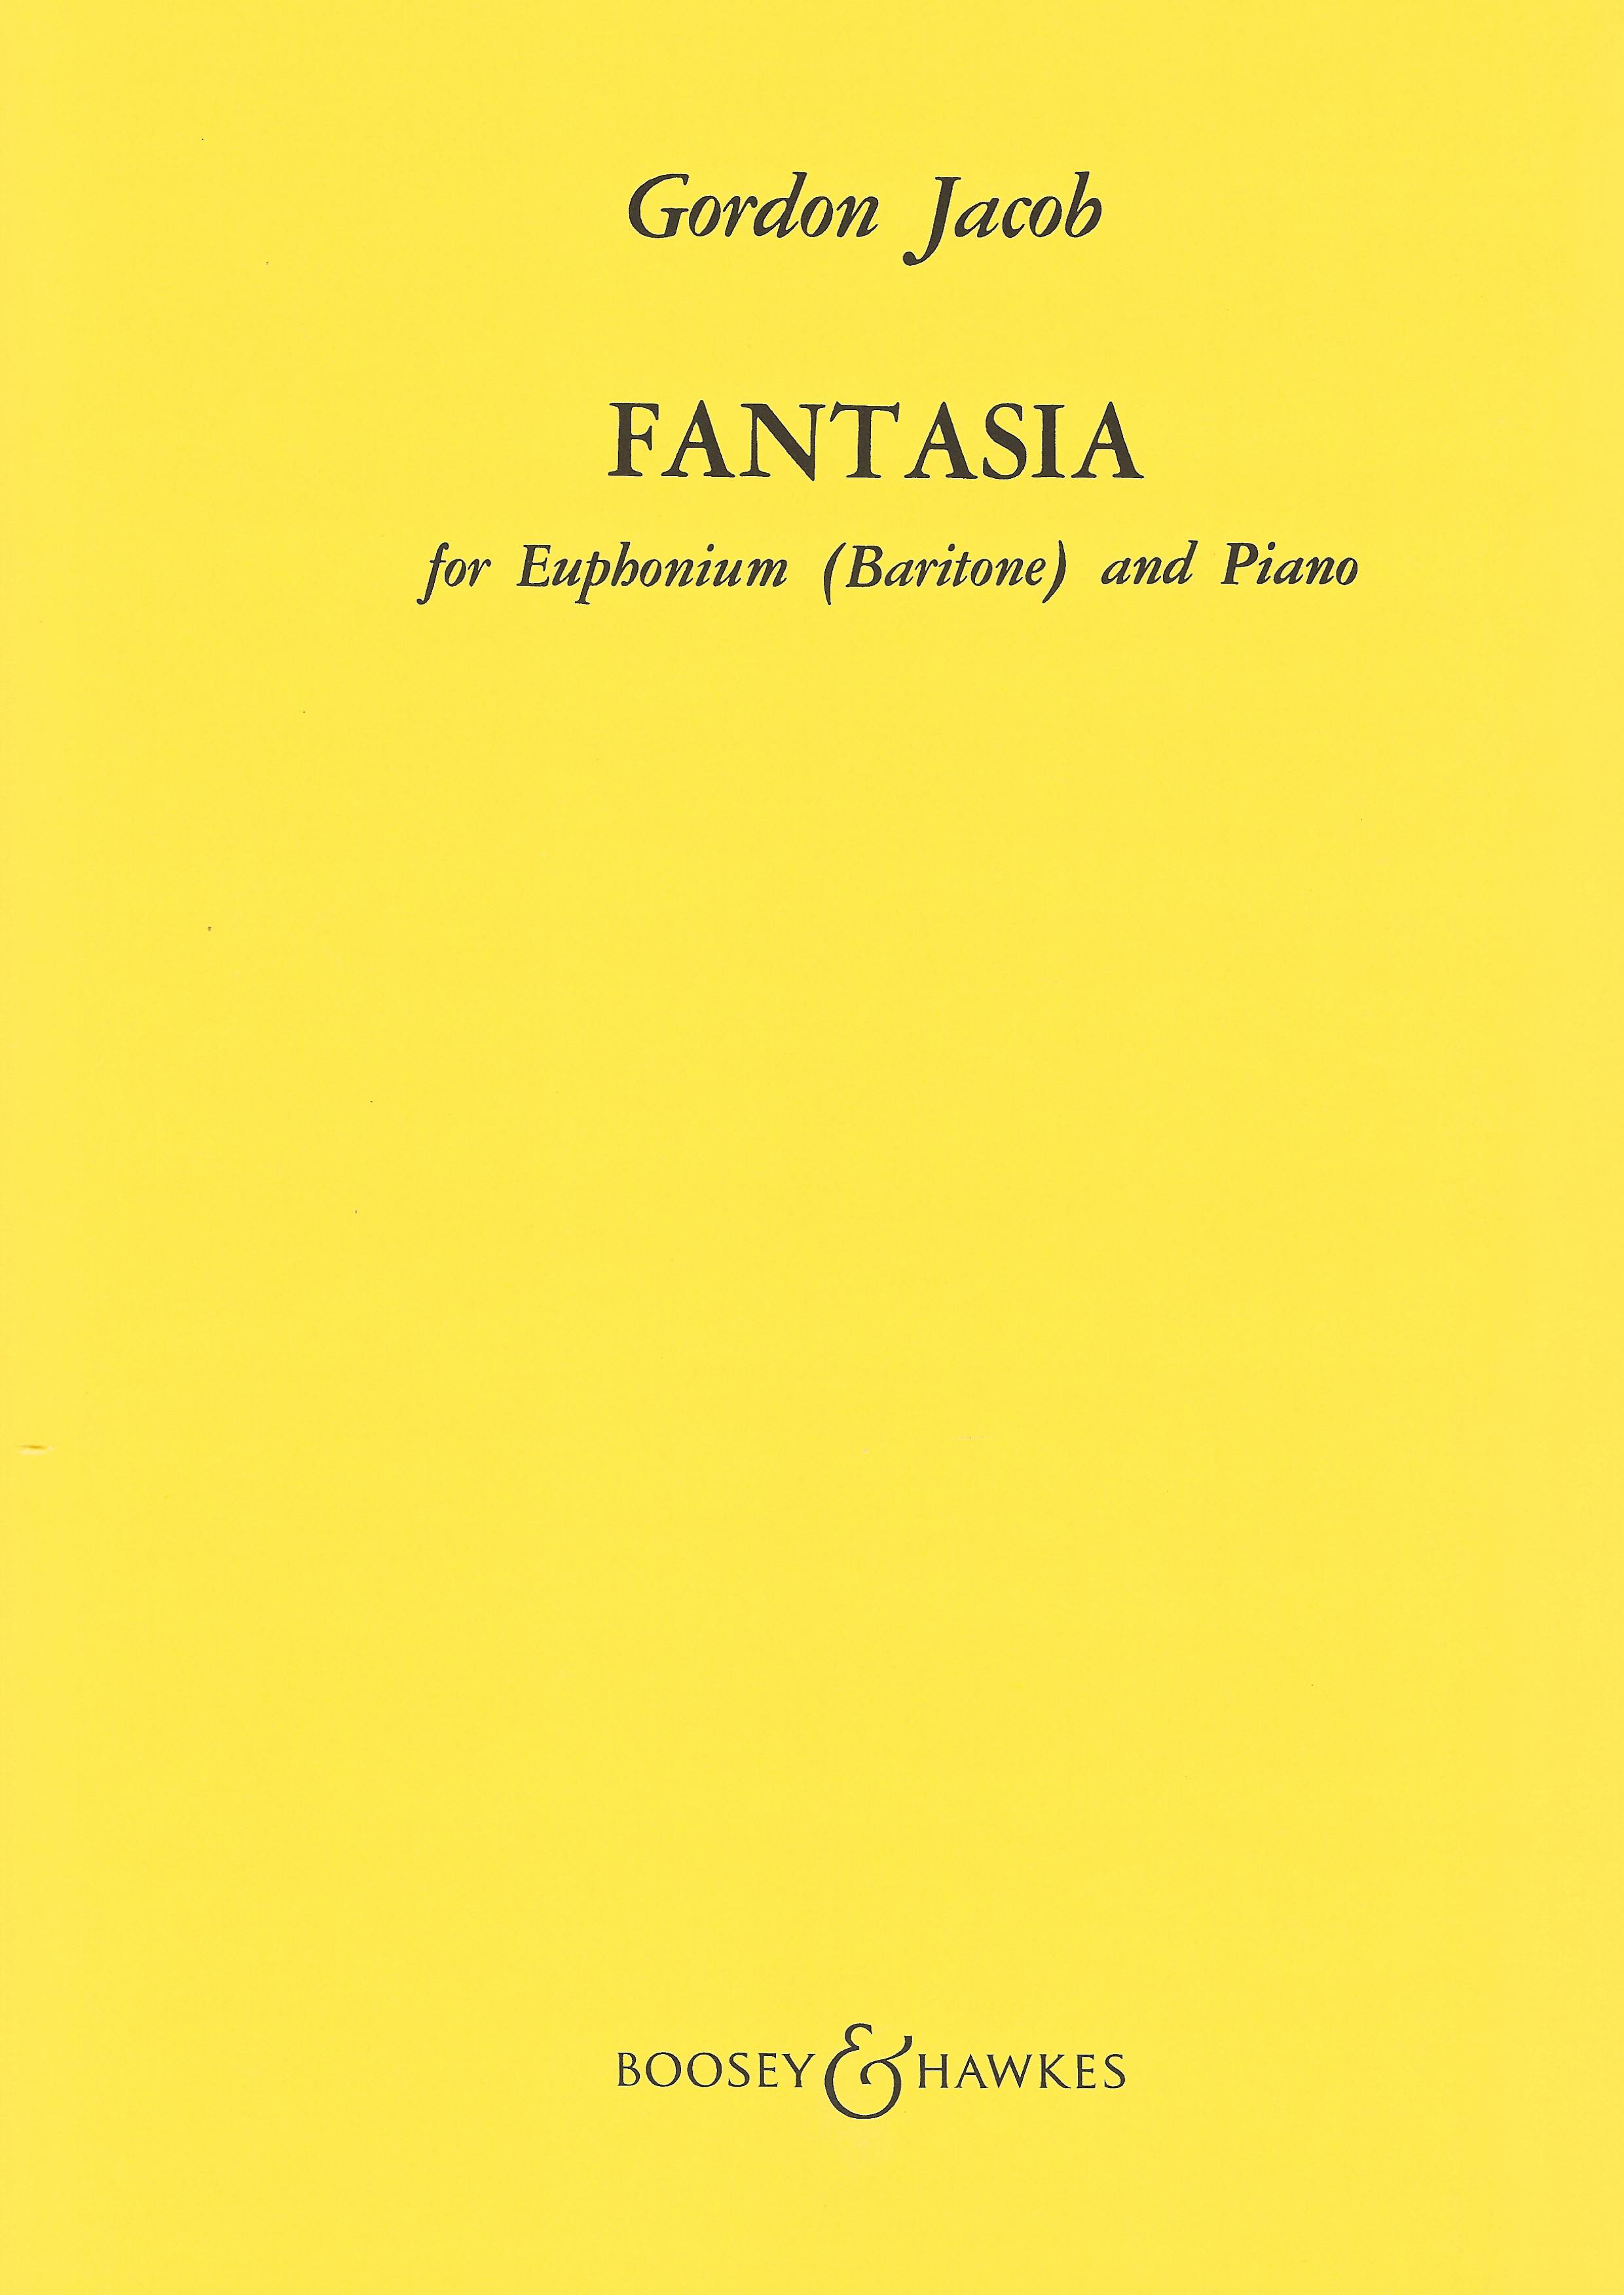 Fantasia - Gordon Jacob - Euphonium and Piano